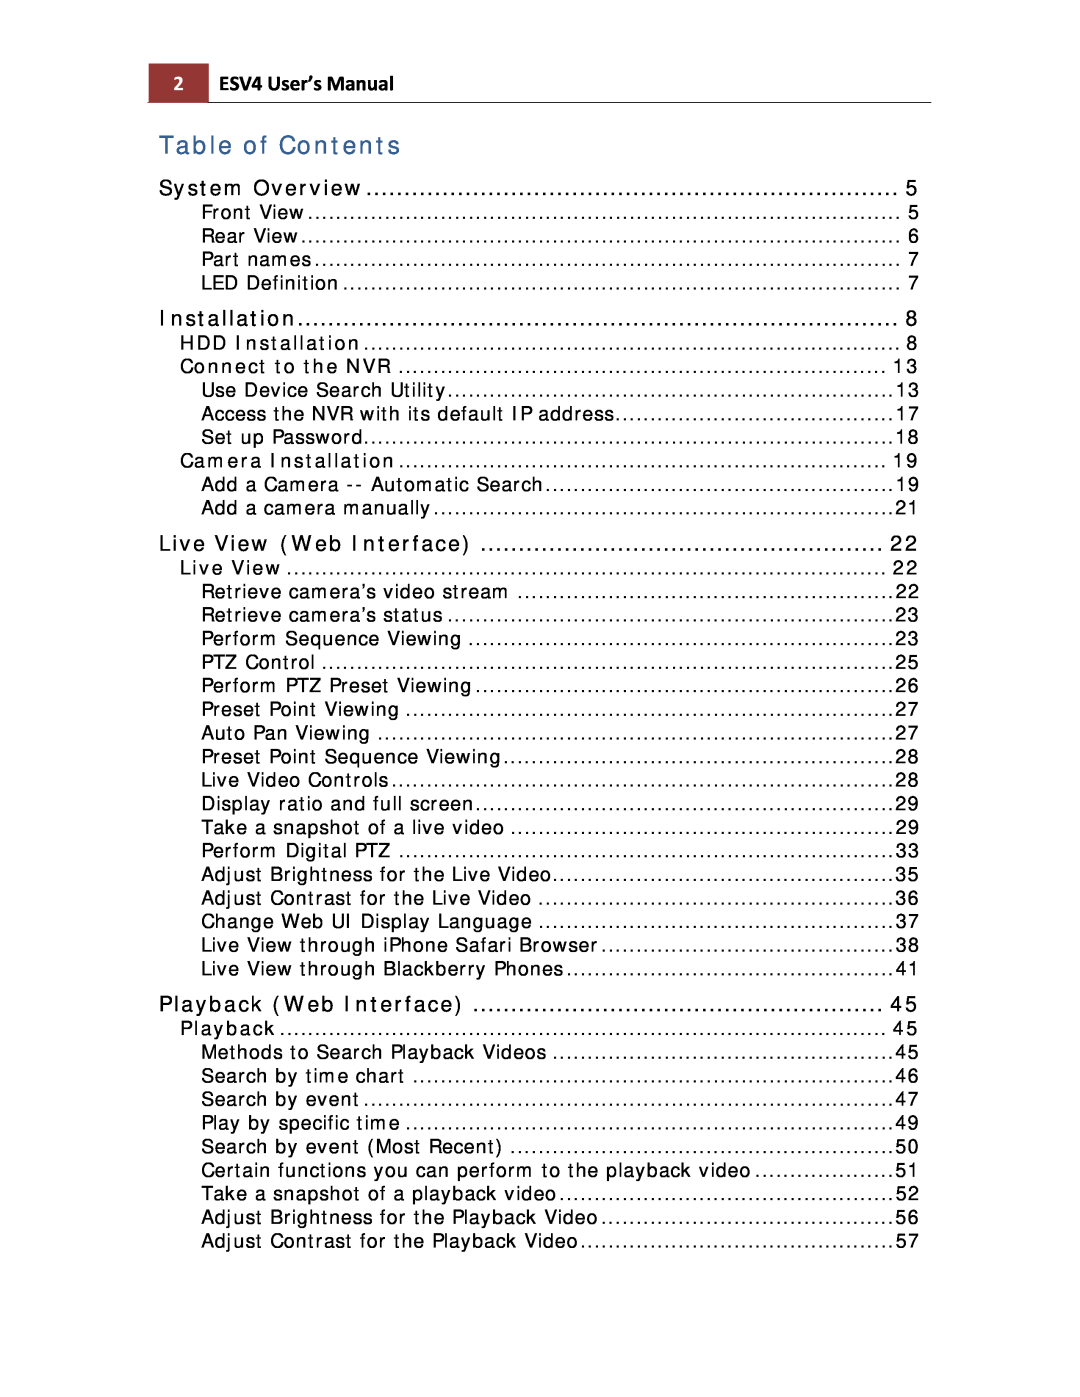 Toshiba ESV41T user manual 2ESV4 User’s Manual, Table of Contents 